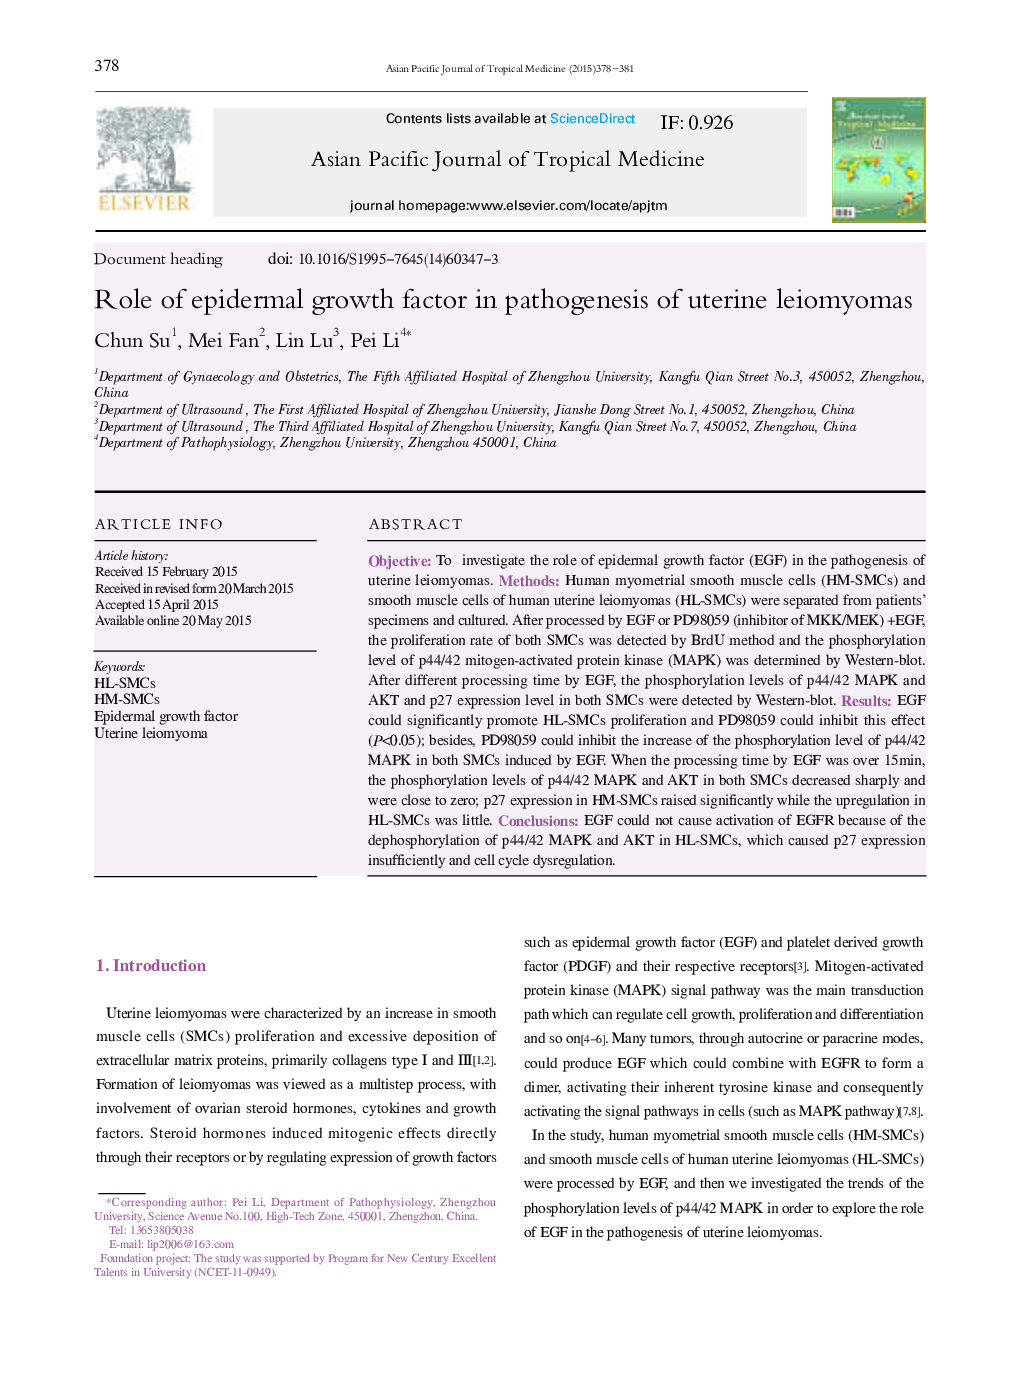 Role of epidermal growth factor in pathogenesis of uterine leiomyomas 